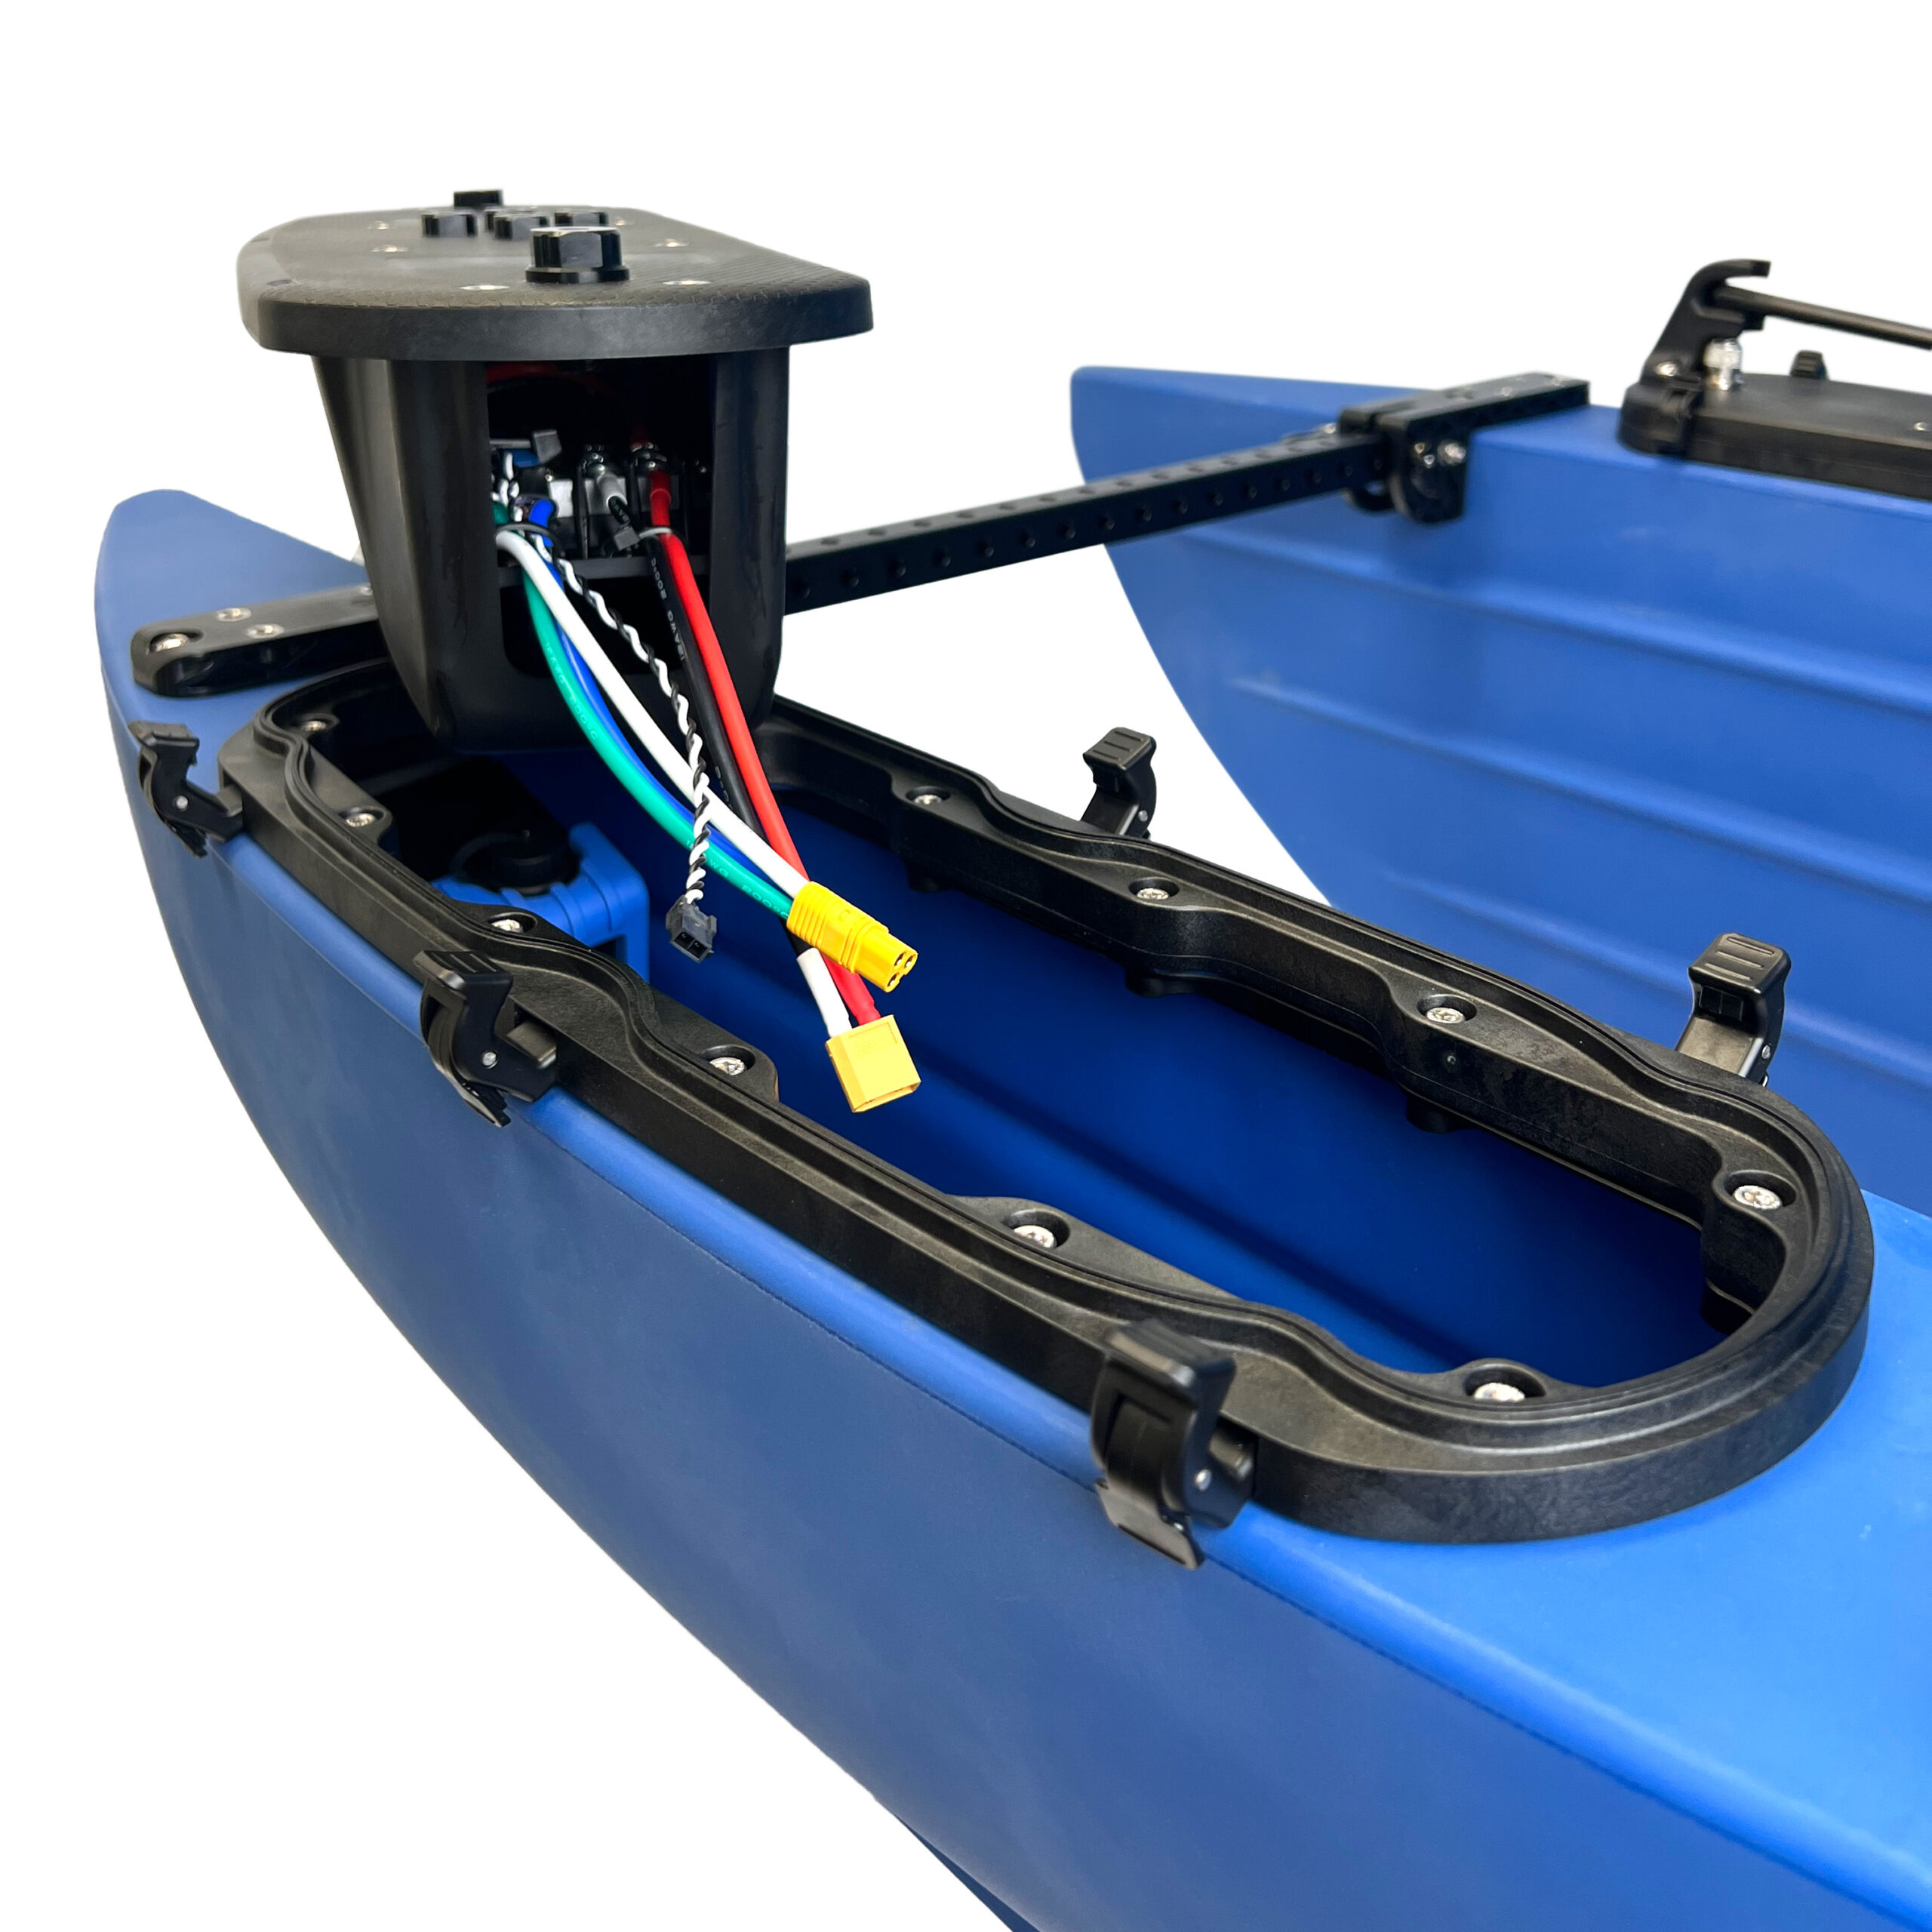 BlueBoat - USV for Hydrographic Surveys and Robotics